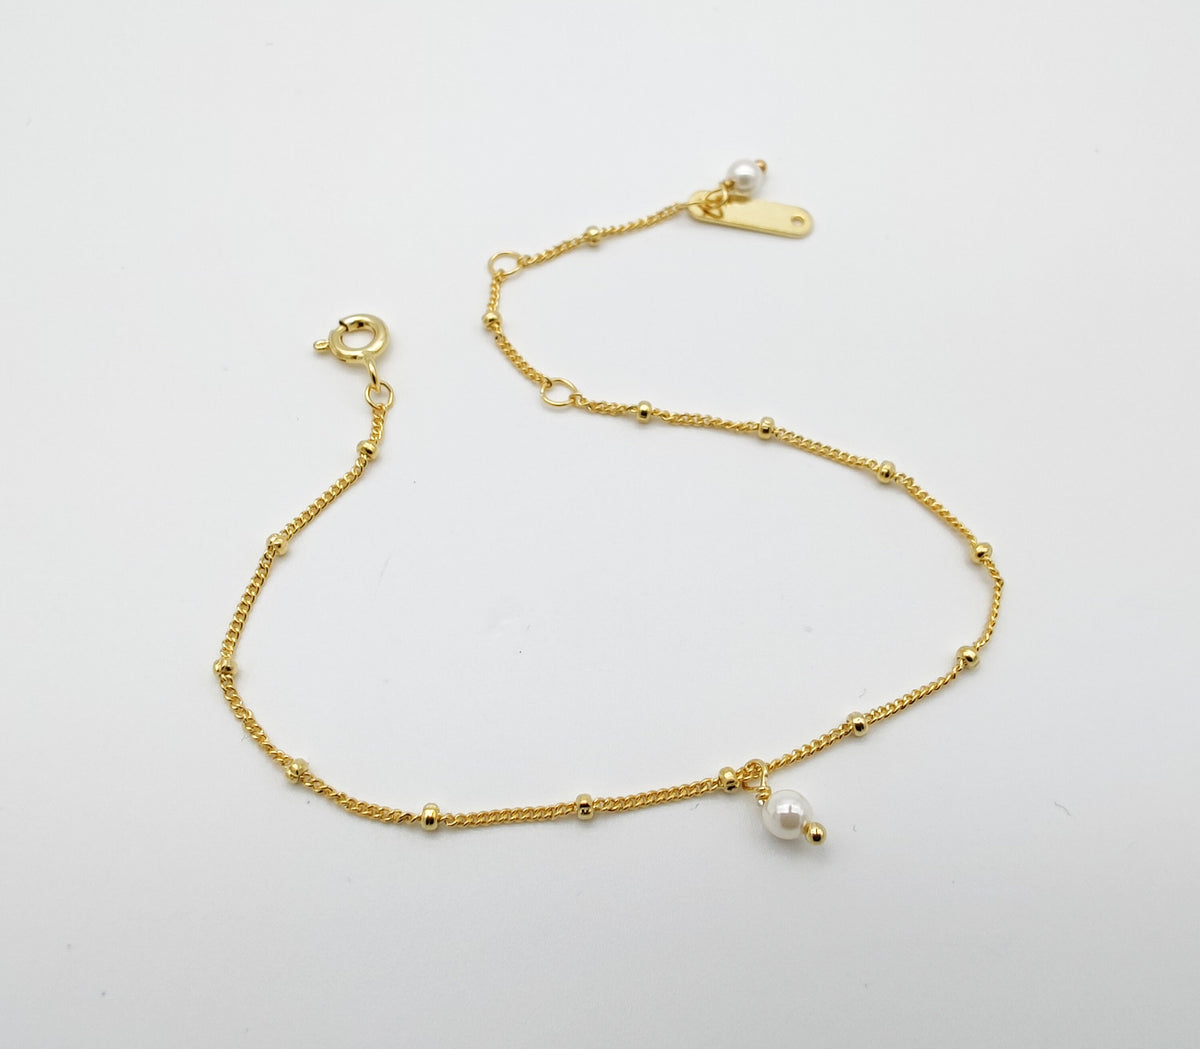 Zartes Armband-Kugelarmband-Stapelarmband-Perlenschmuck-schlicht-minimalistisch-925er Silber-vergoldet-Satellitenarmband-Kugelarmband-Perle